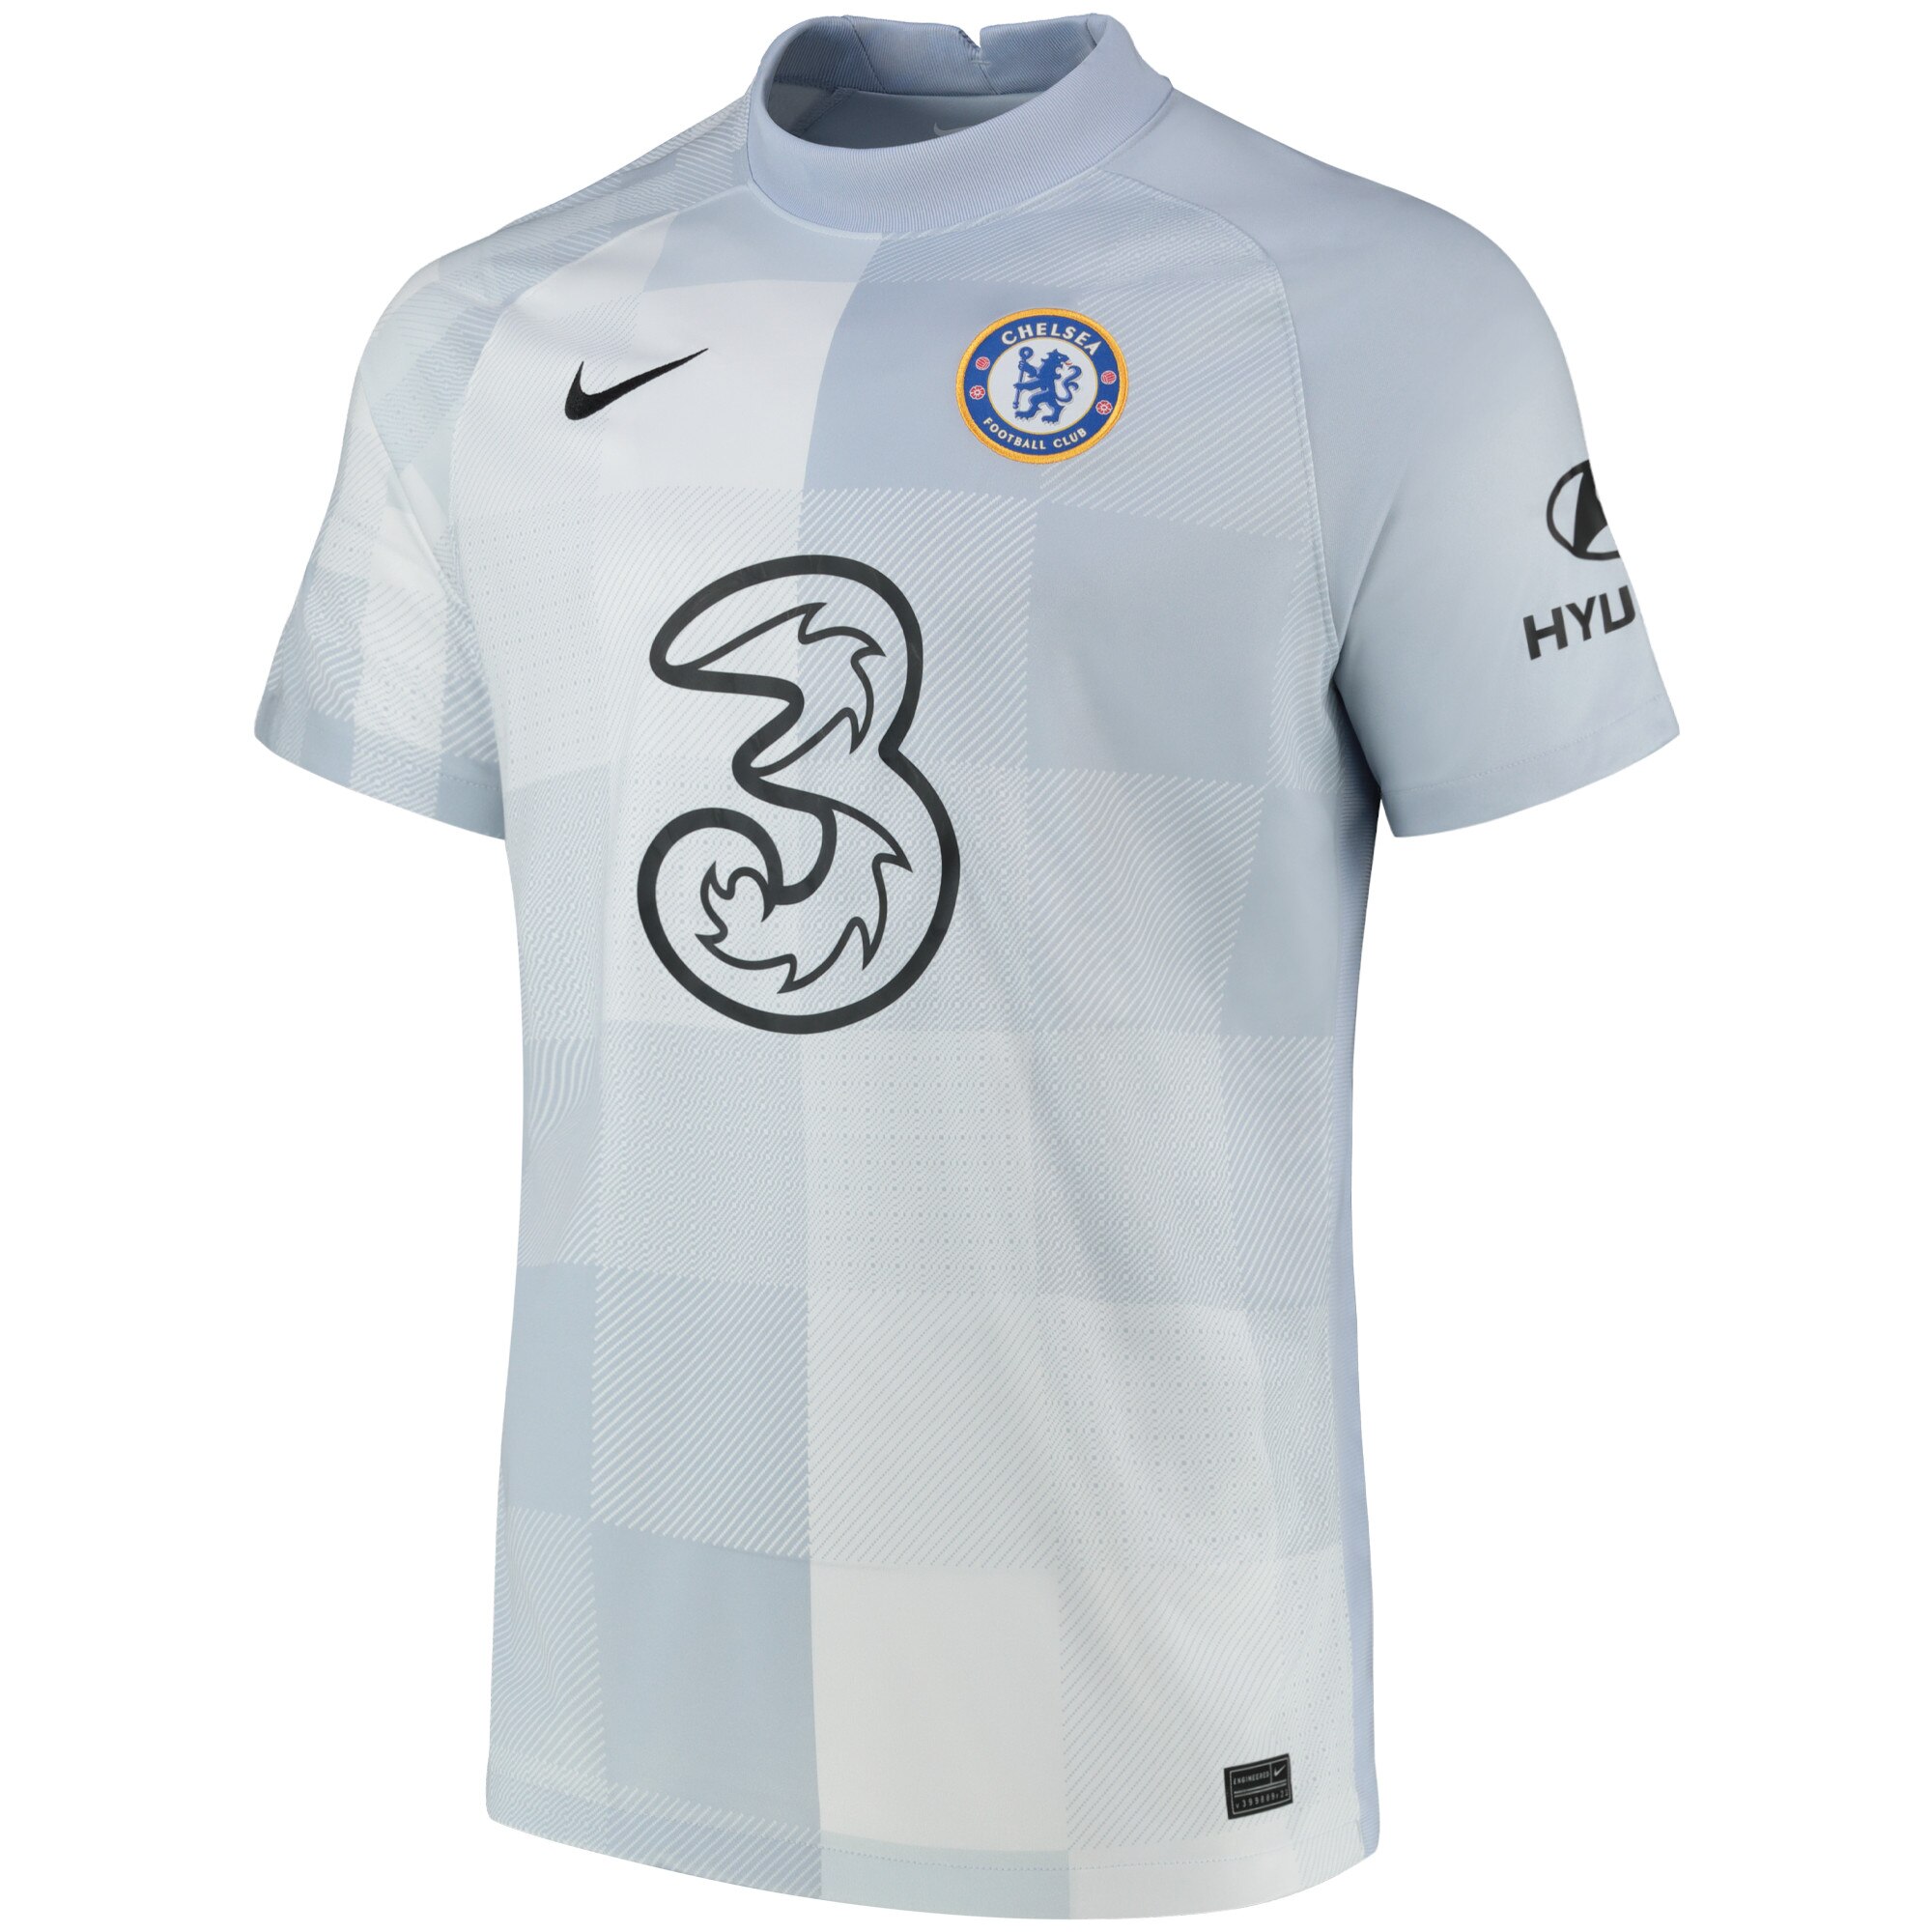 Chelsea Goalkeeper Stadium Shirt 2021-22 with Bettinelli 13 printing